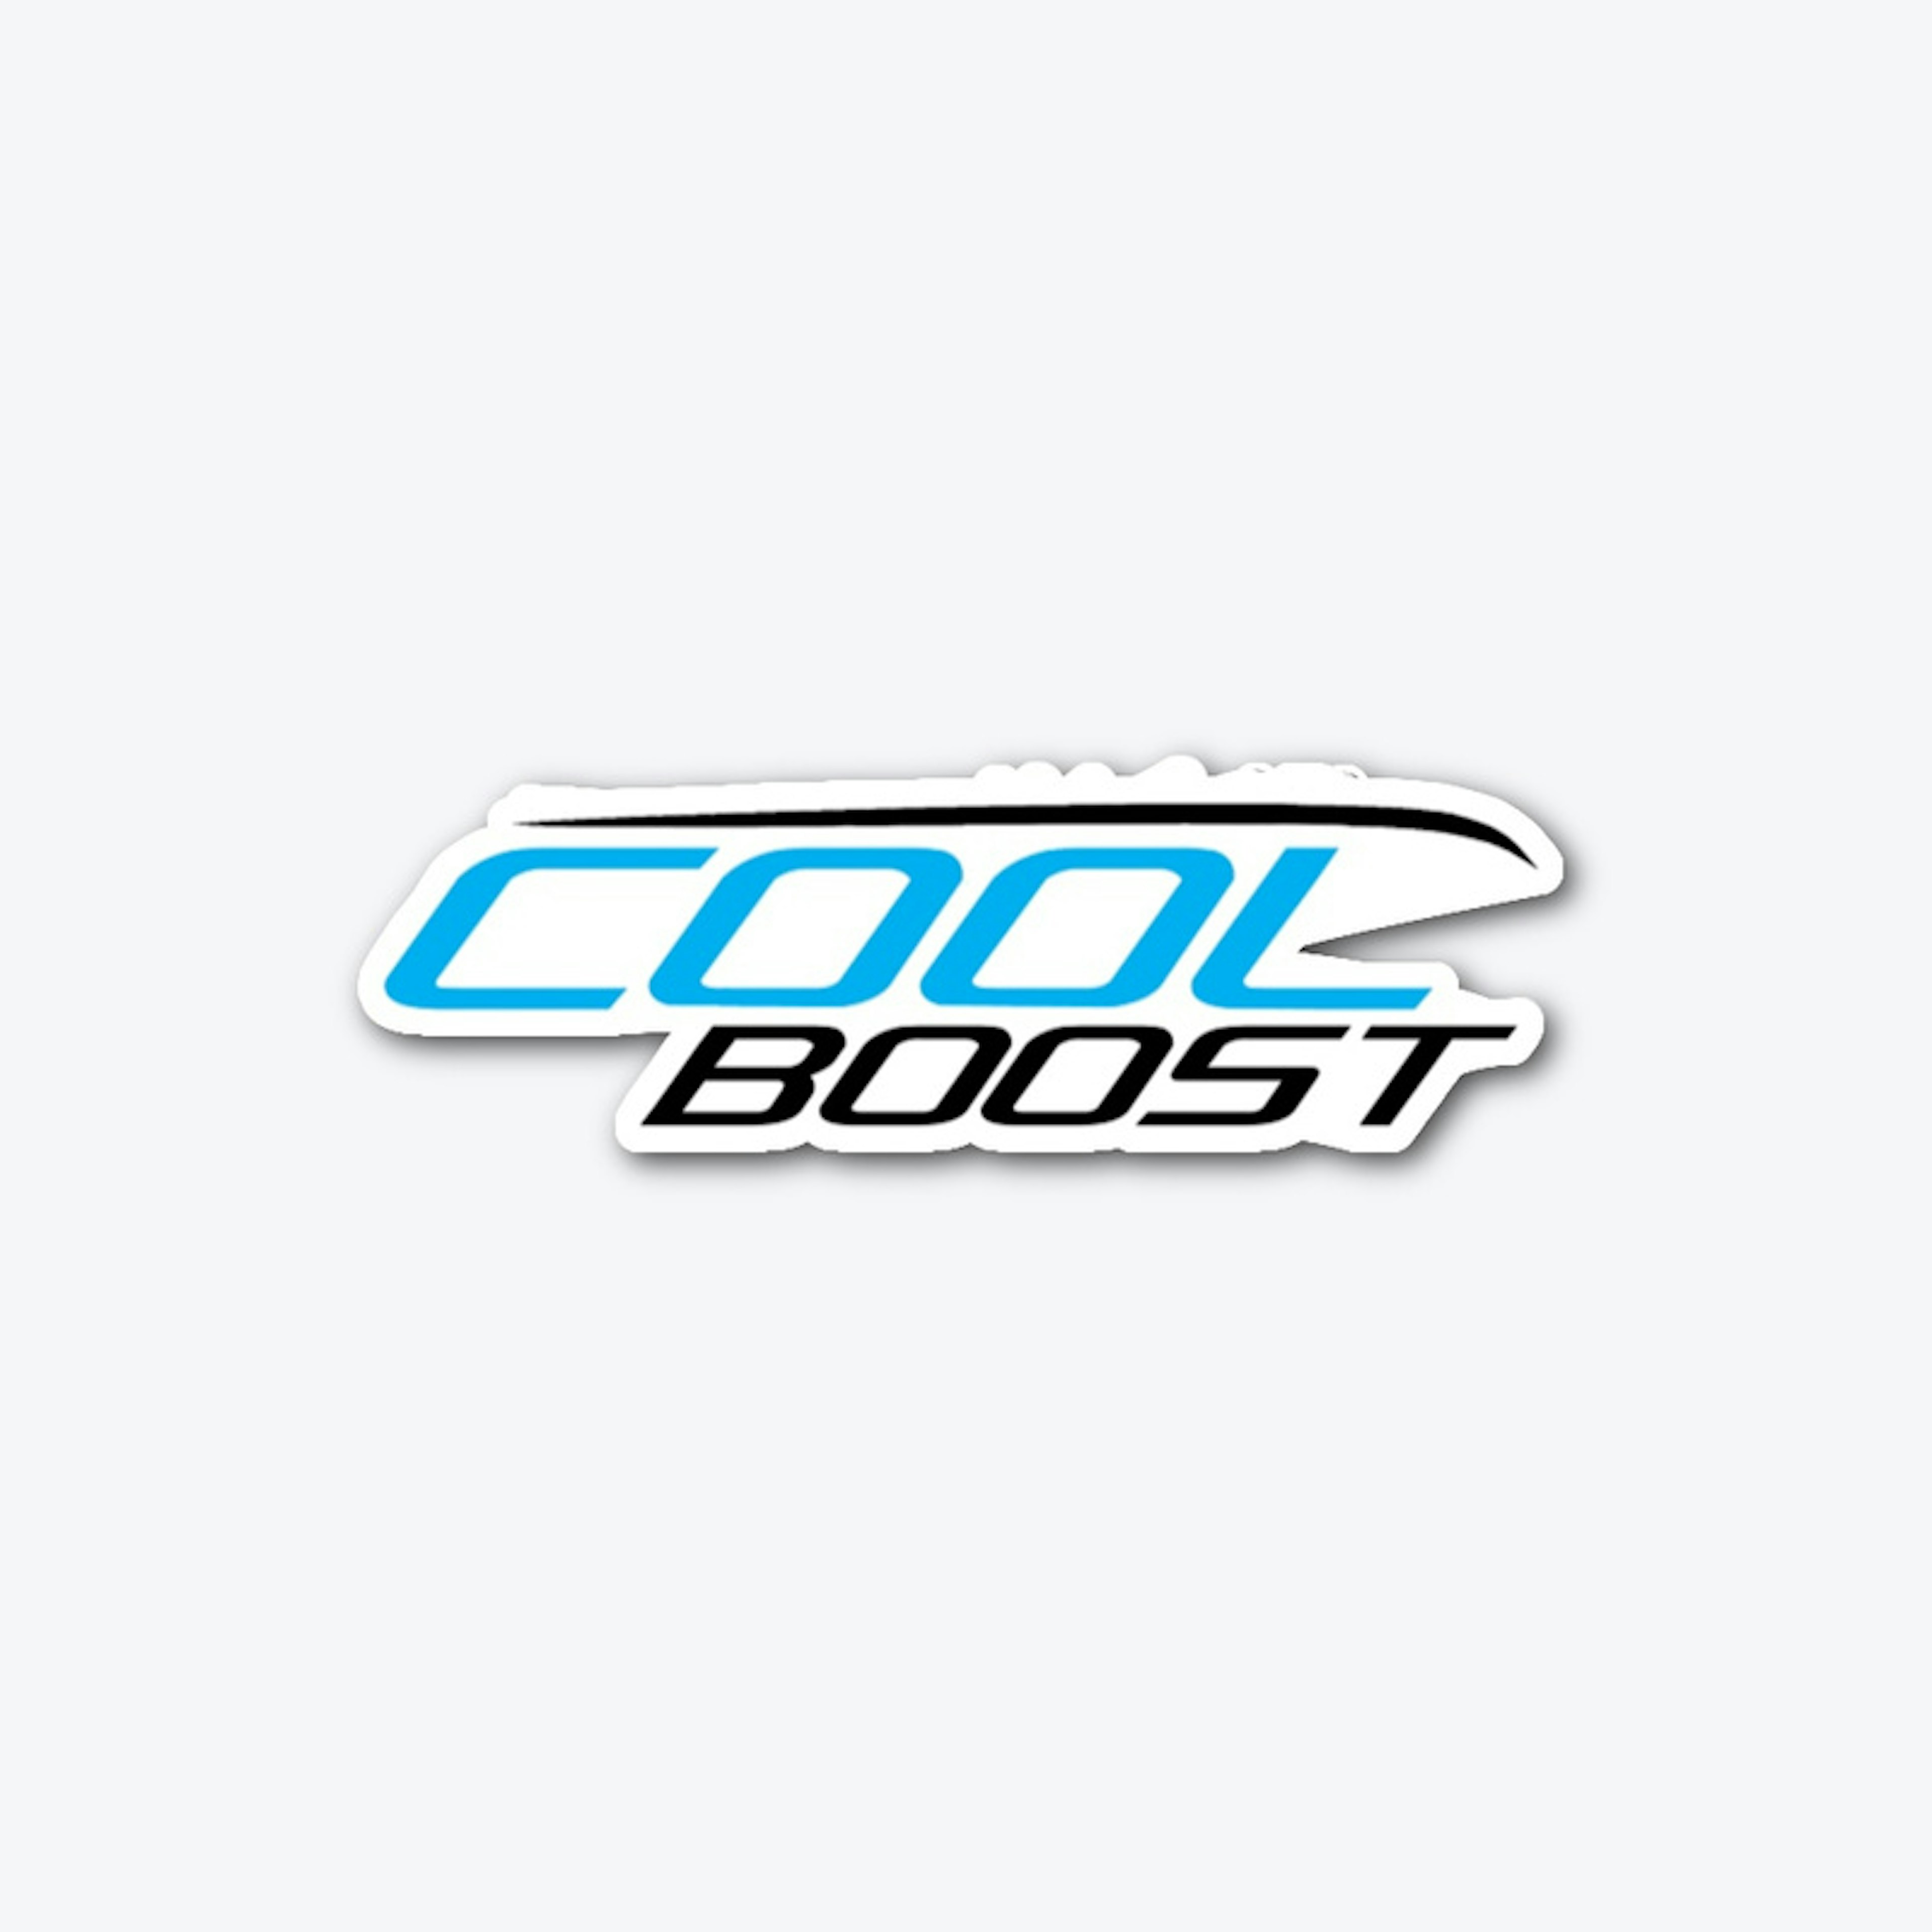 CoolBoost